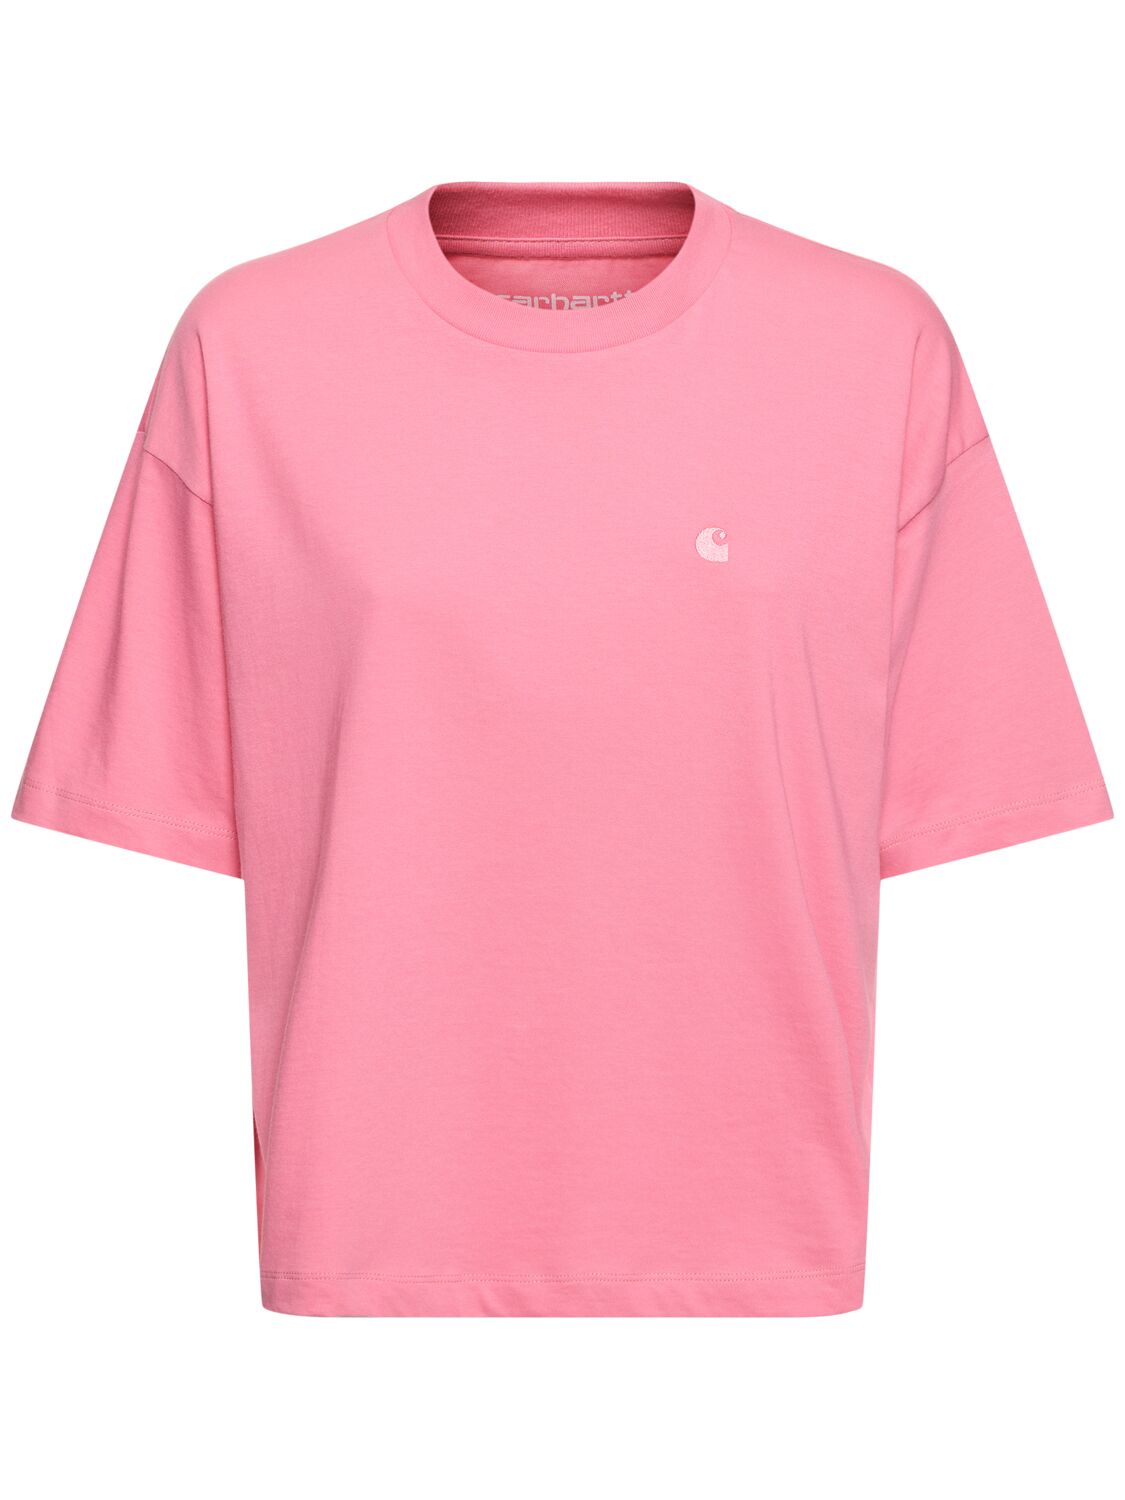 Carhartt Chester Organic Cotton T-shirt In Charm Pink